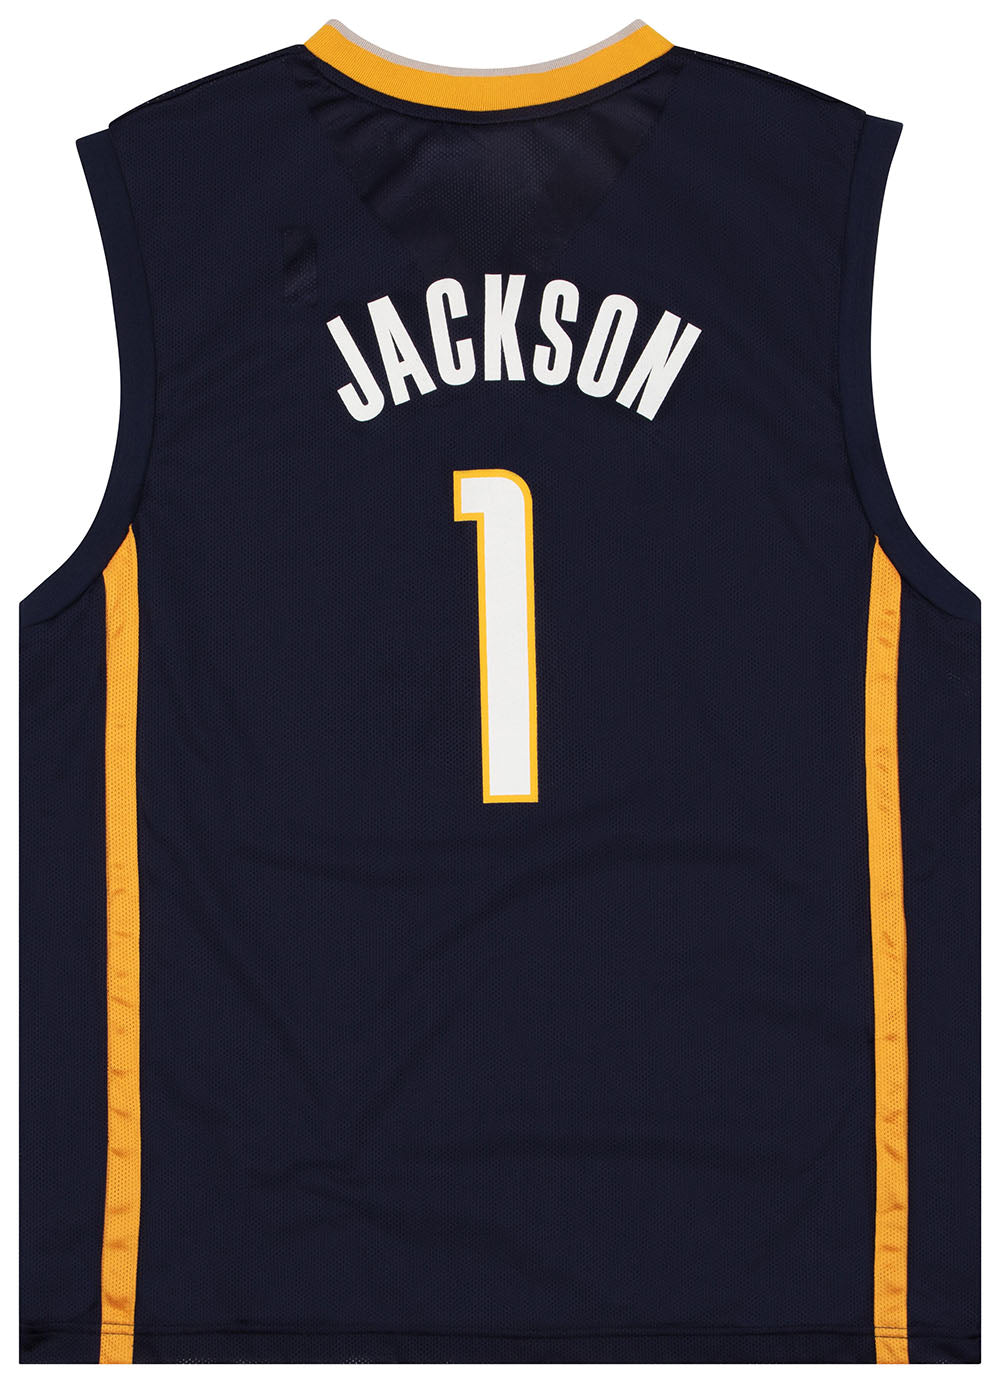 Stephen Jackson Indiana Pacers NBA Reebok Swingman Jersey Mens Sz Small